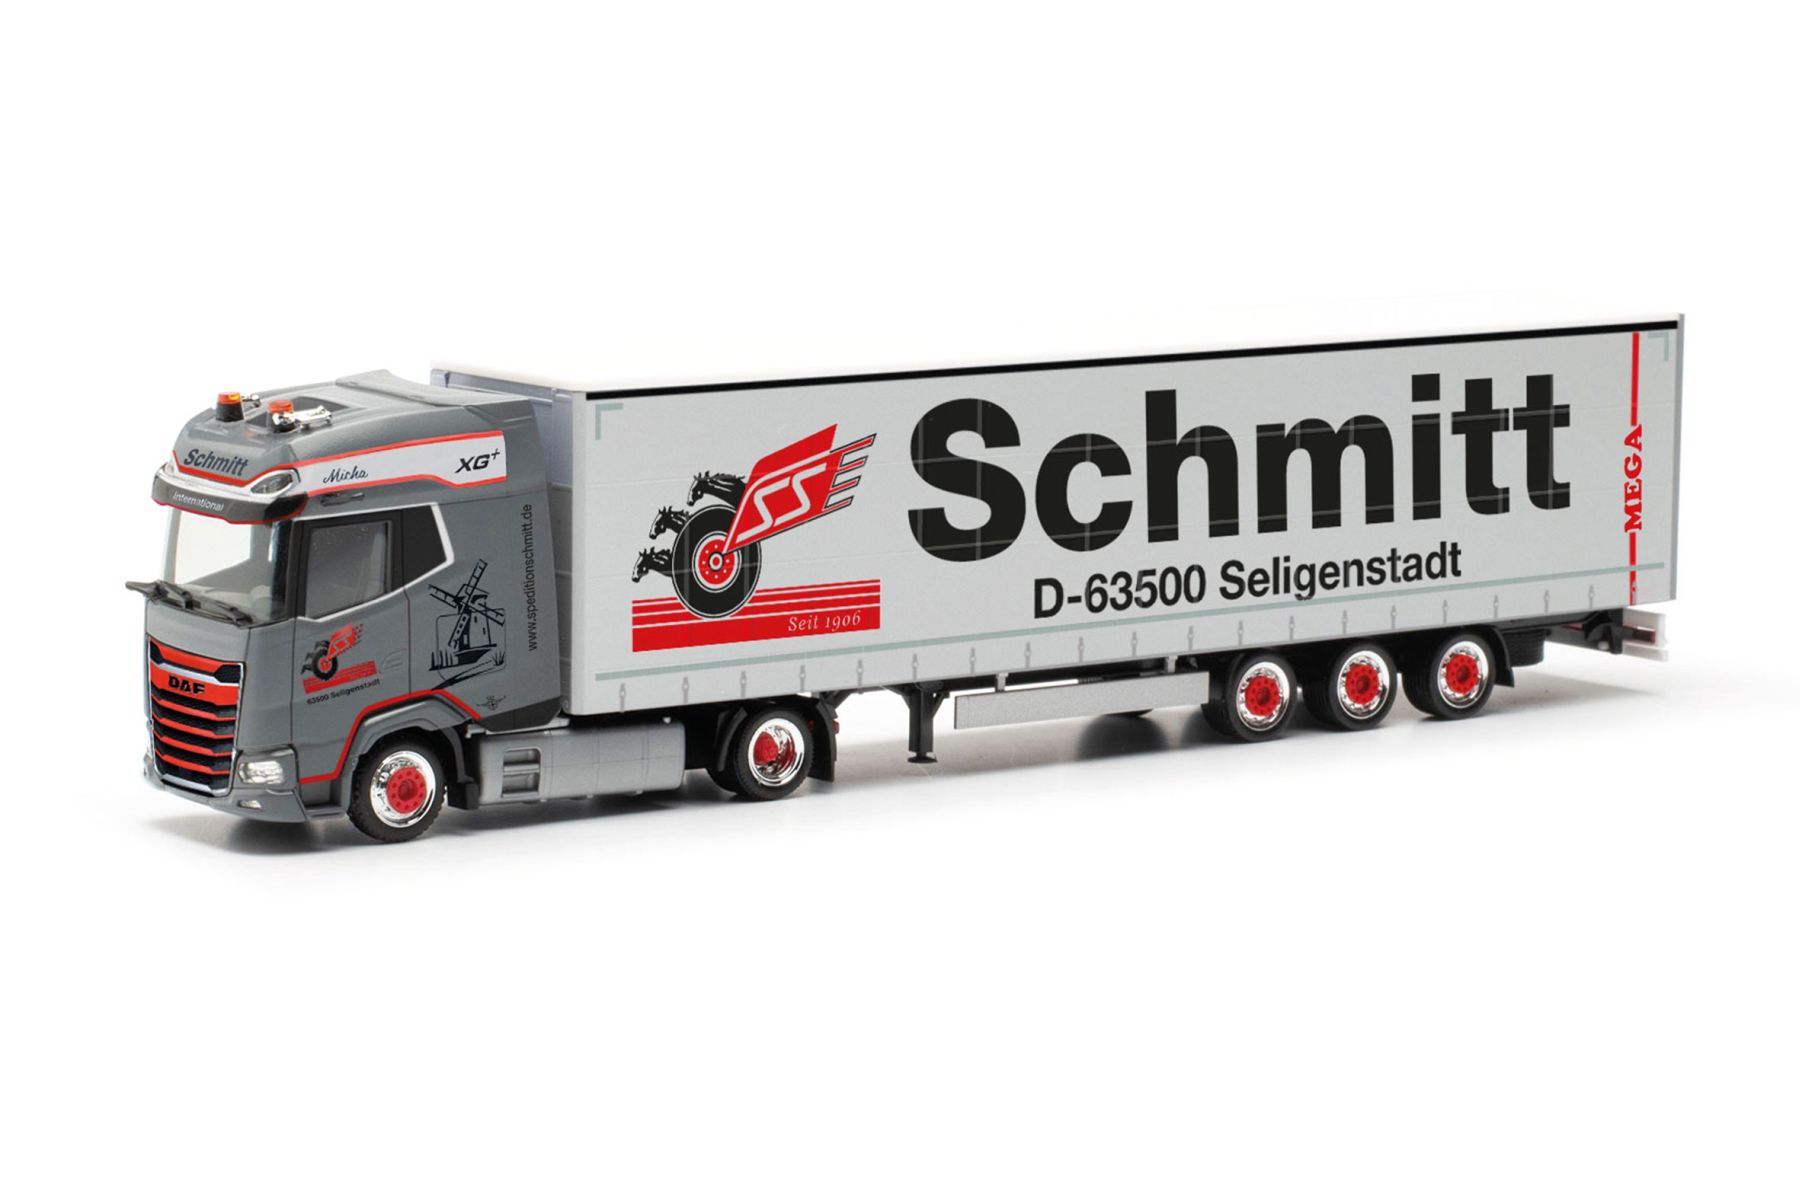 Herpa 317405 - DAF XG+ Lowliner-Sattelzug "Schmitt Seligenstadt"